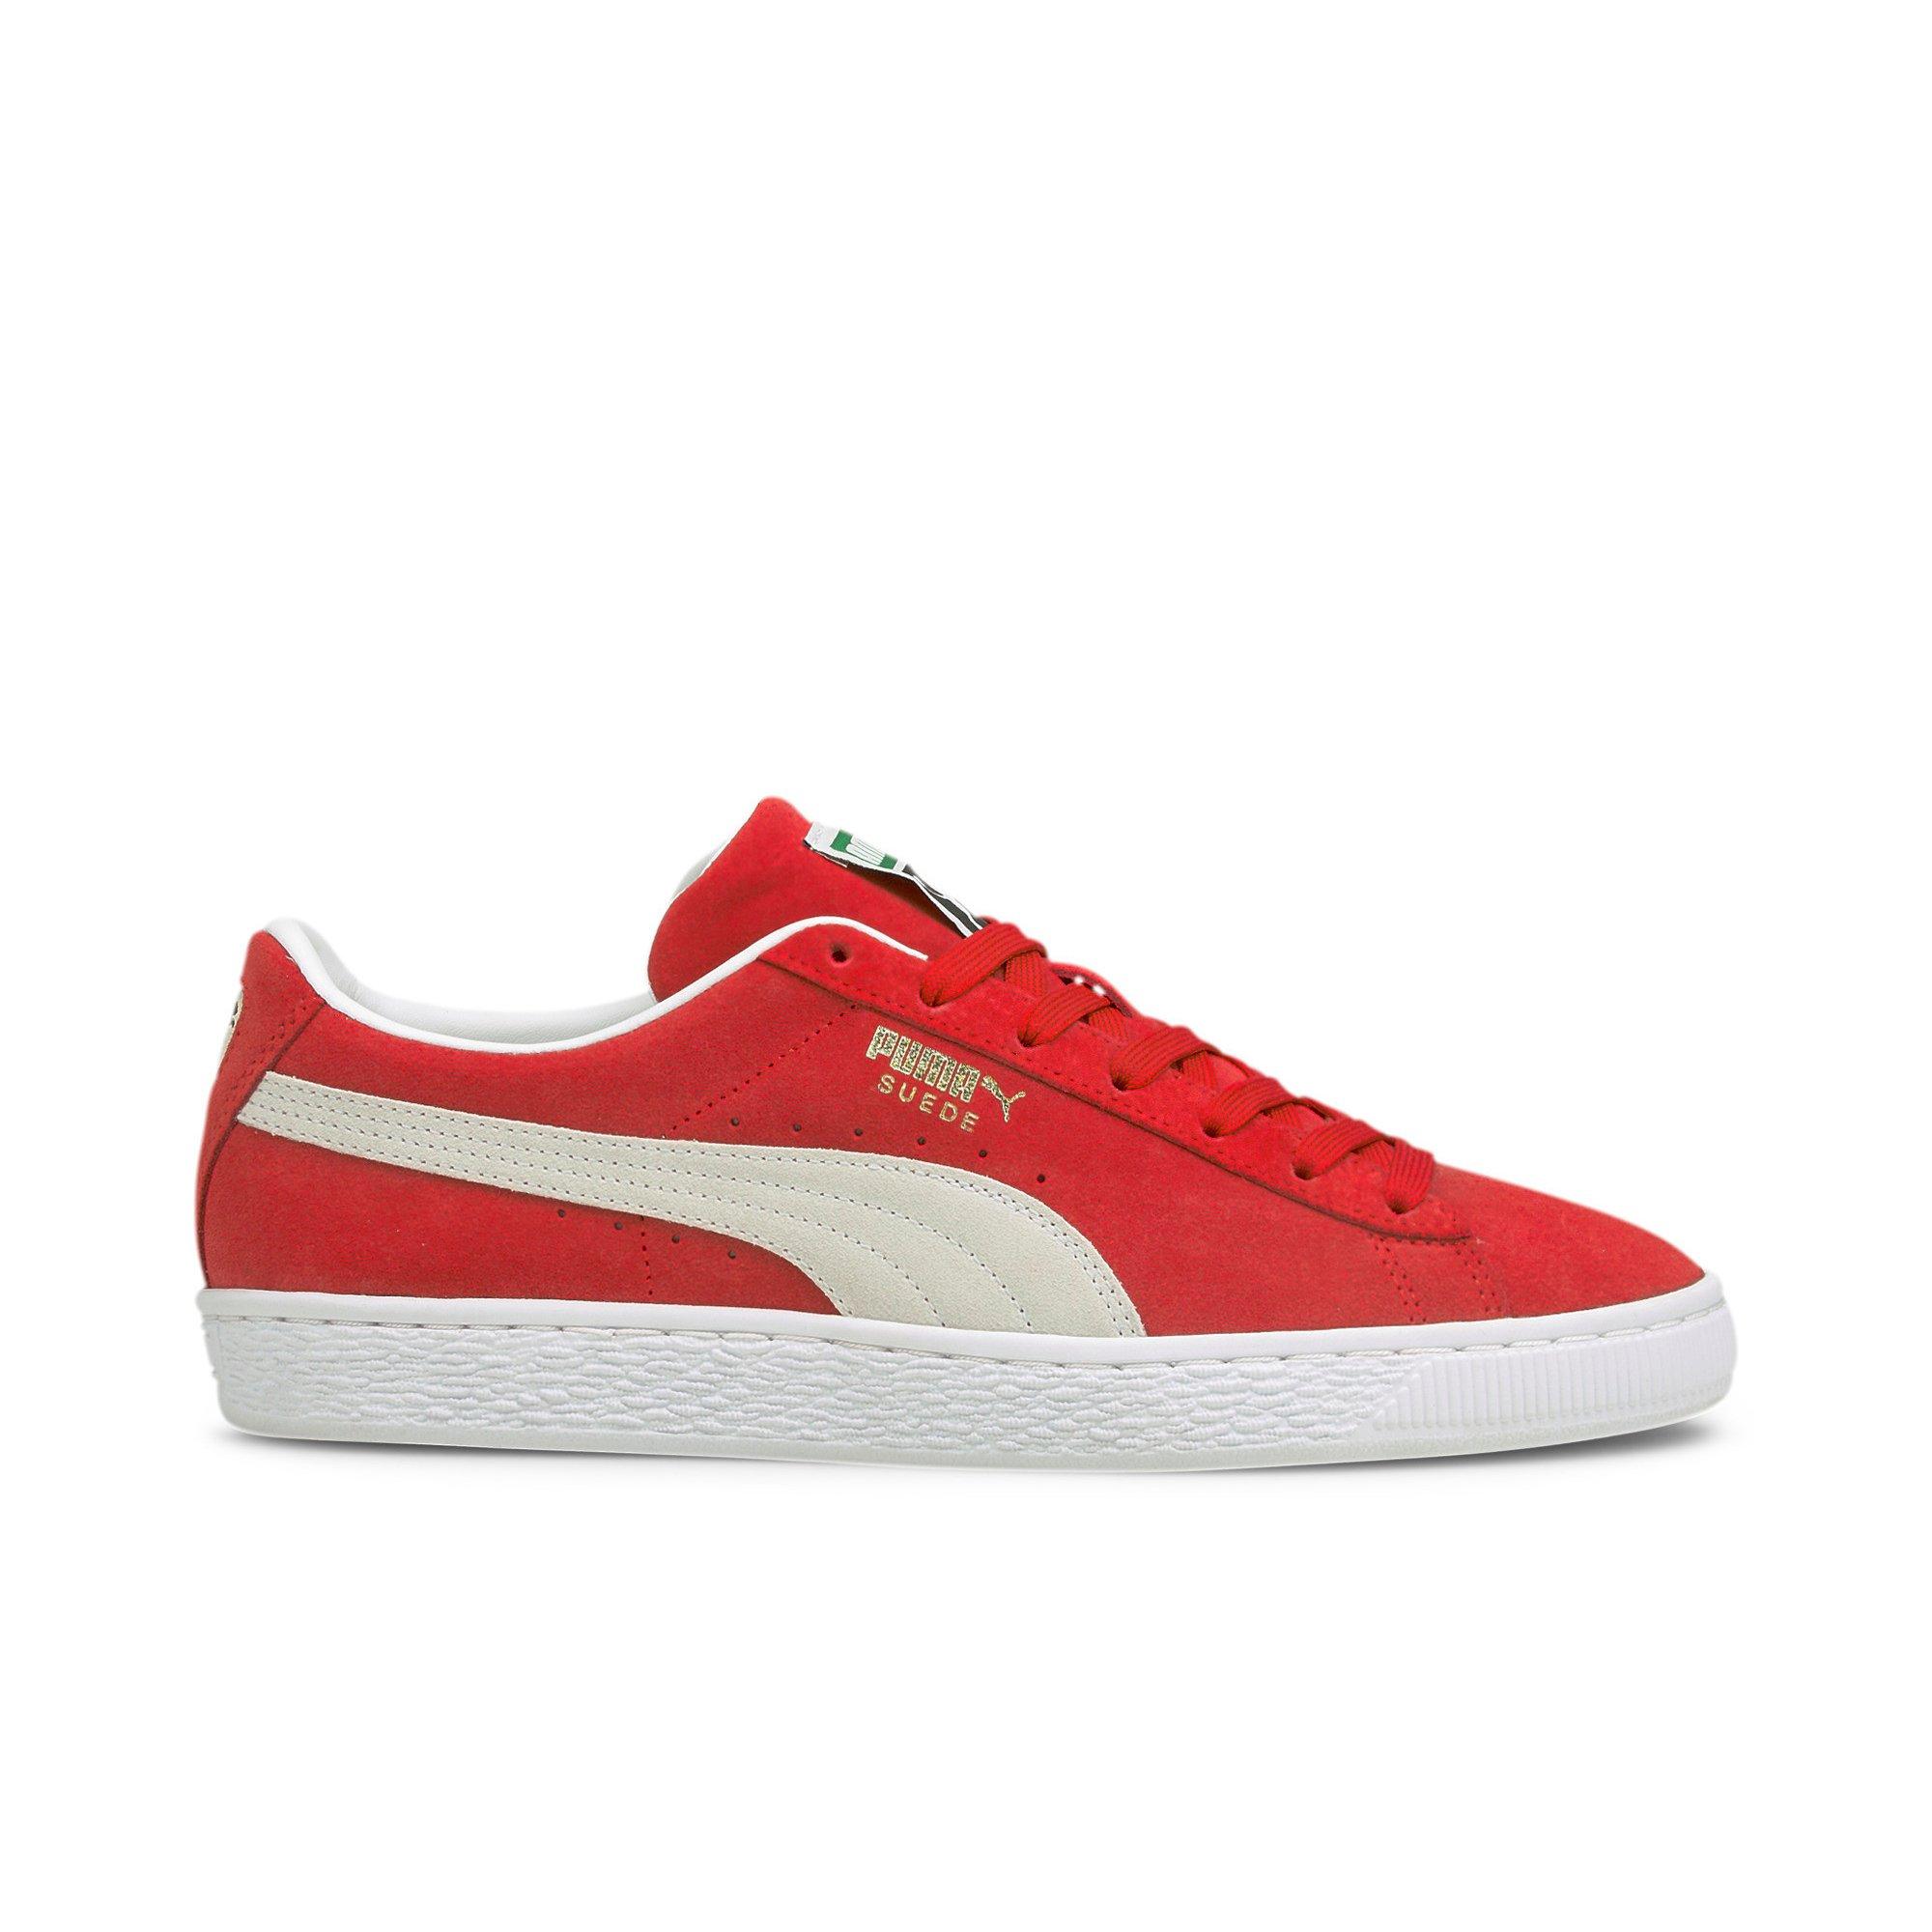 PUMA "Red/White" Men's Shoe